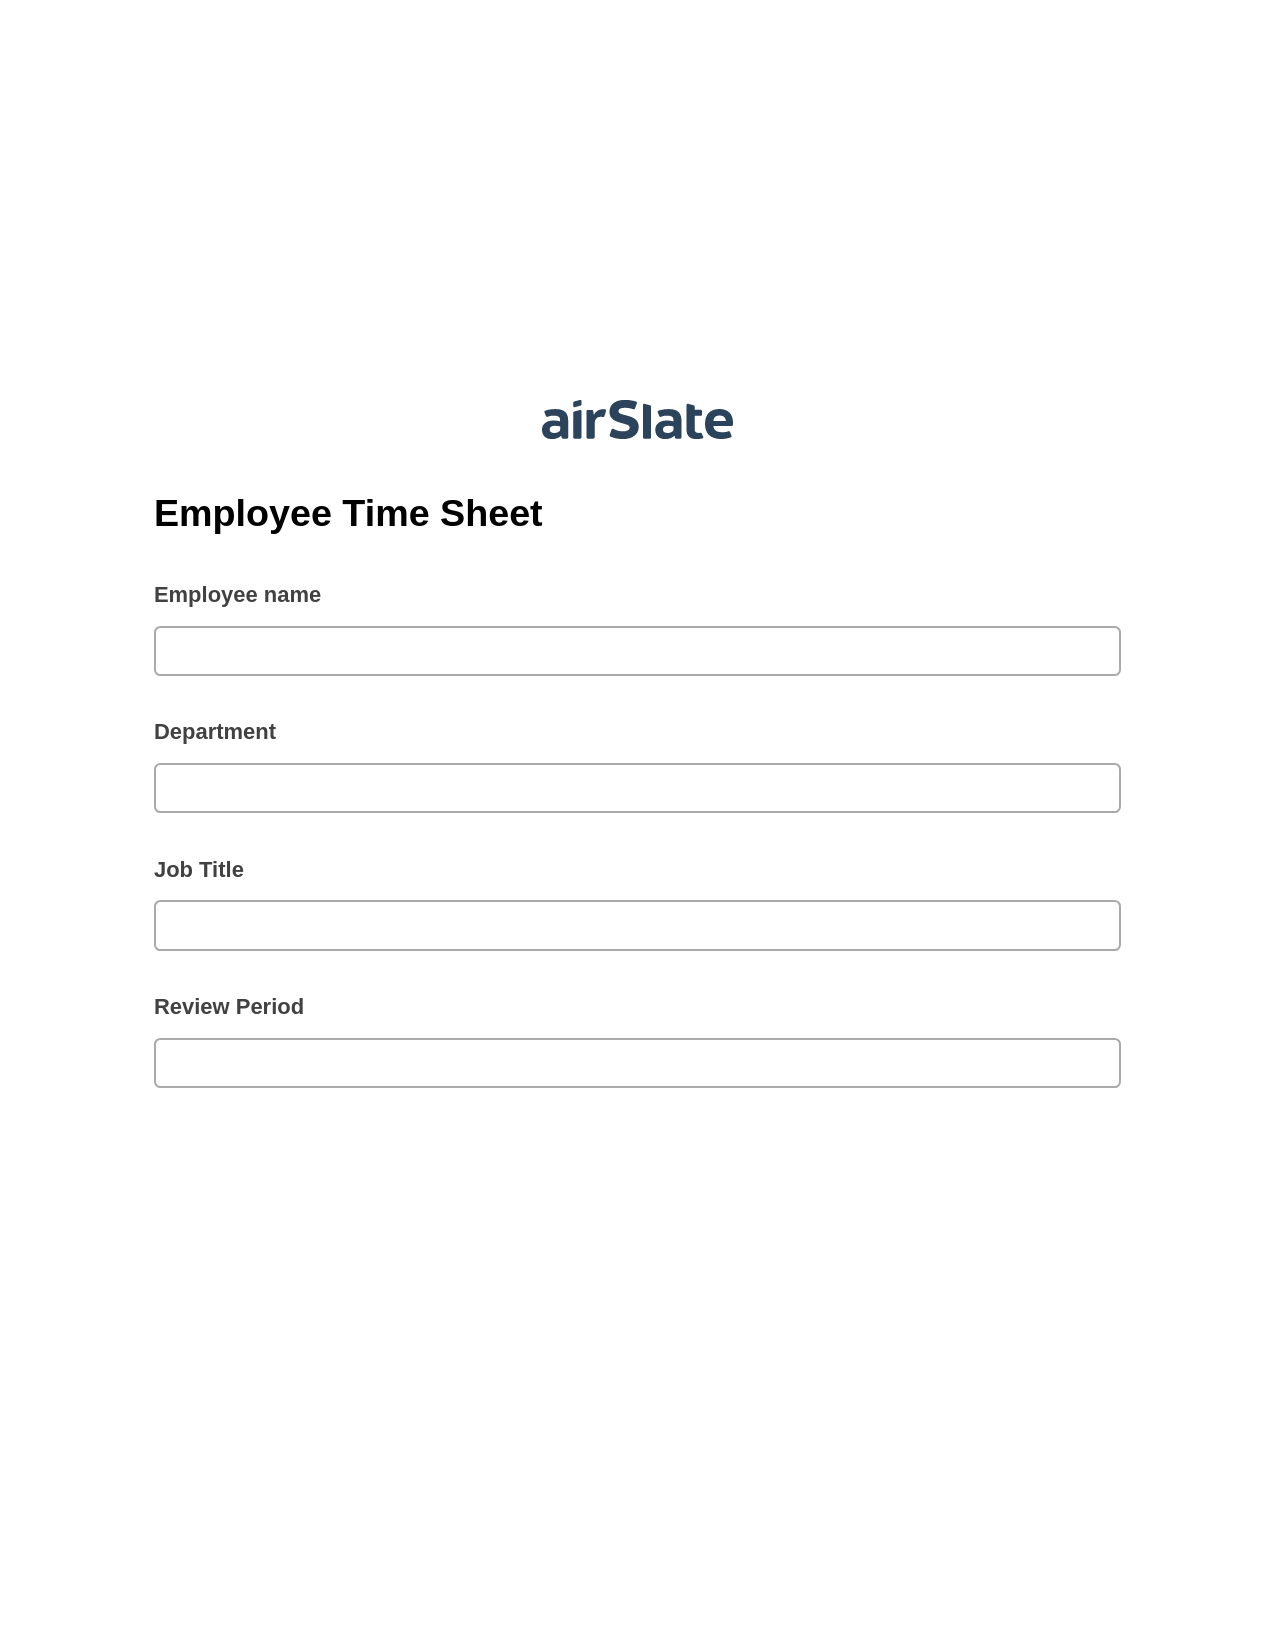 Employee Time Sheet Pre-fill from CSV File Bot, Update Audit Trail Bot, Slack Two-Way Binding Bot